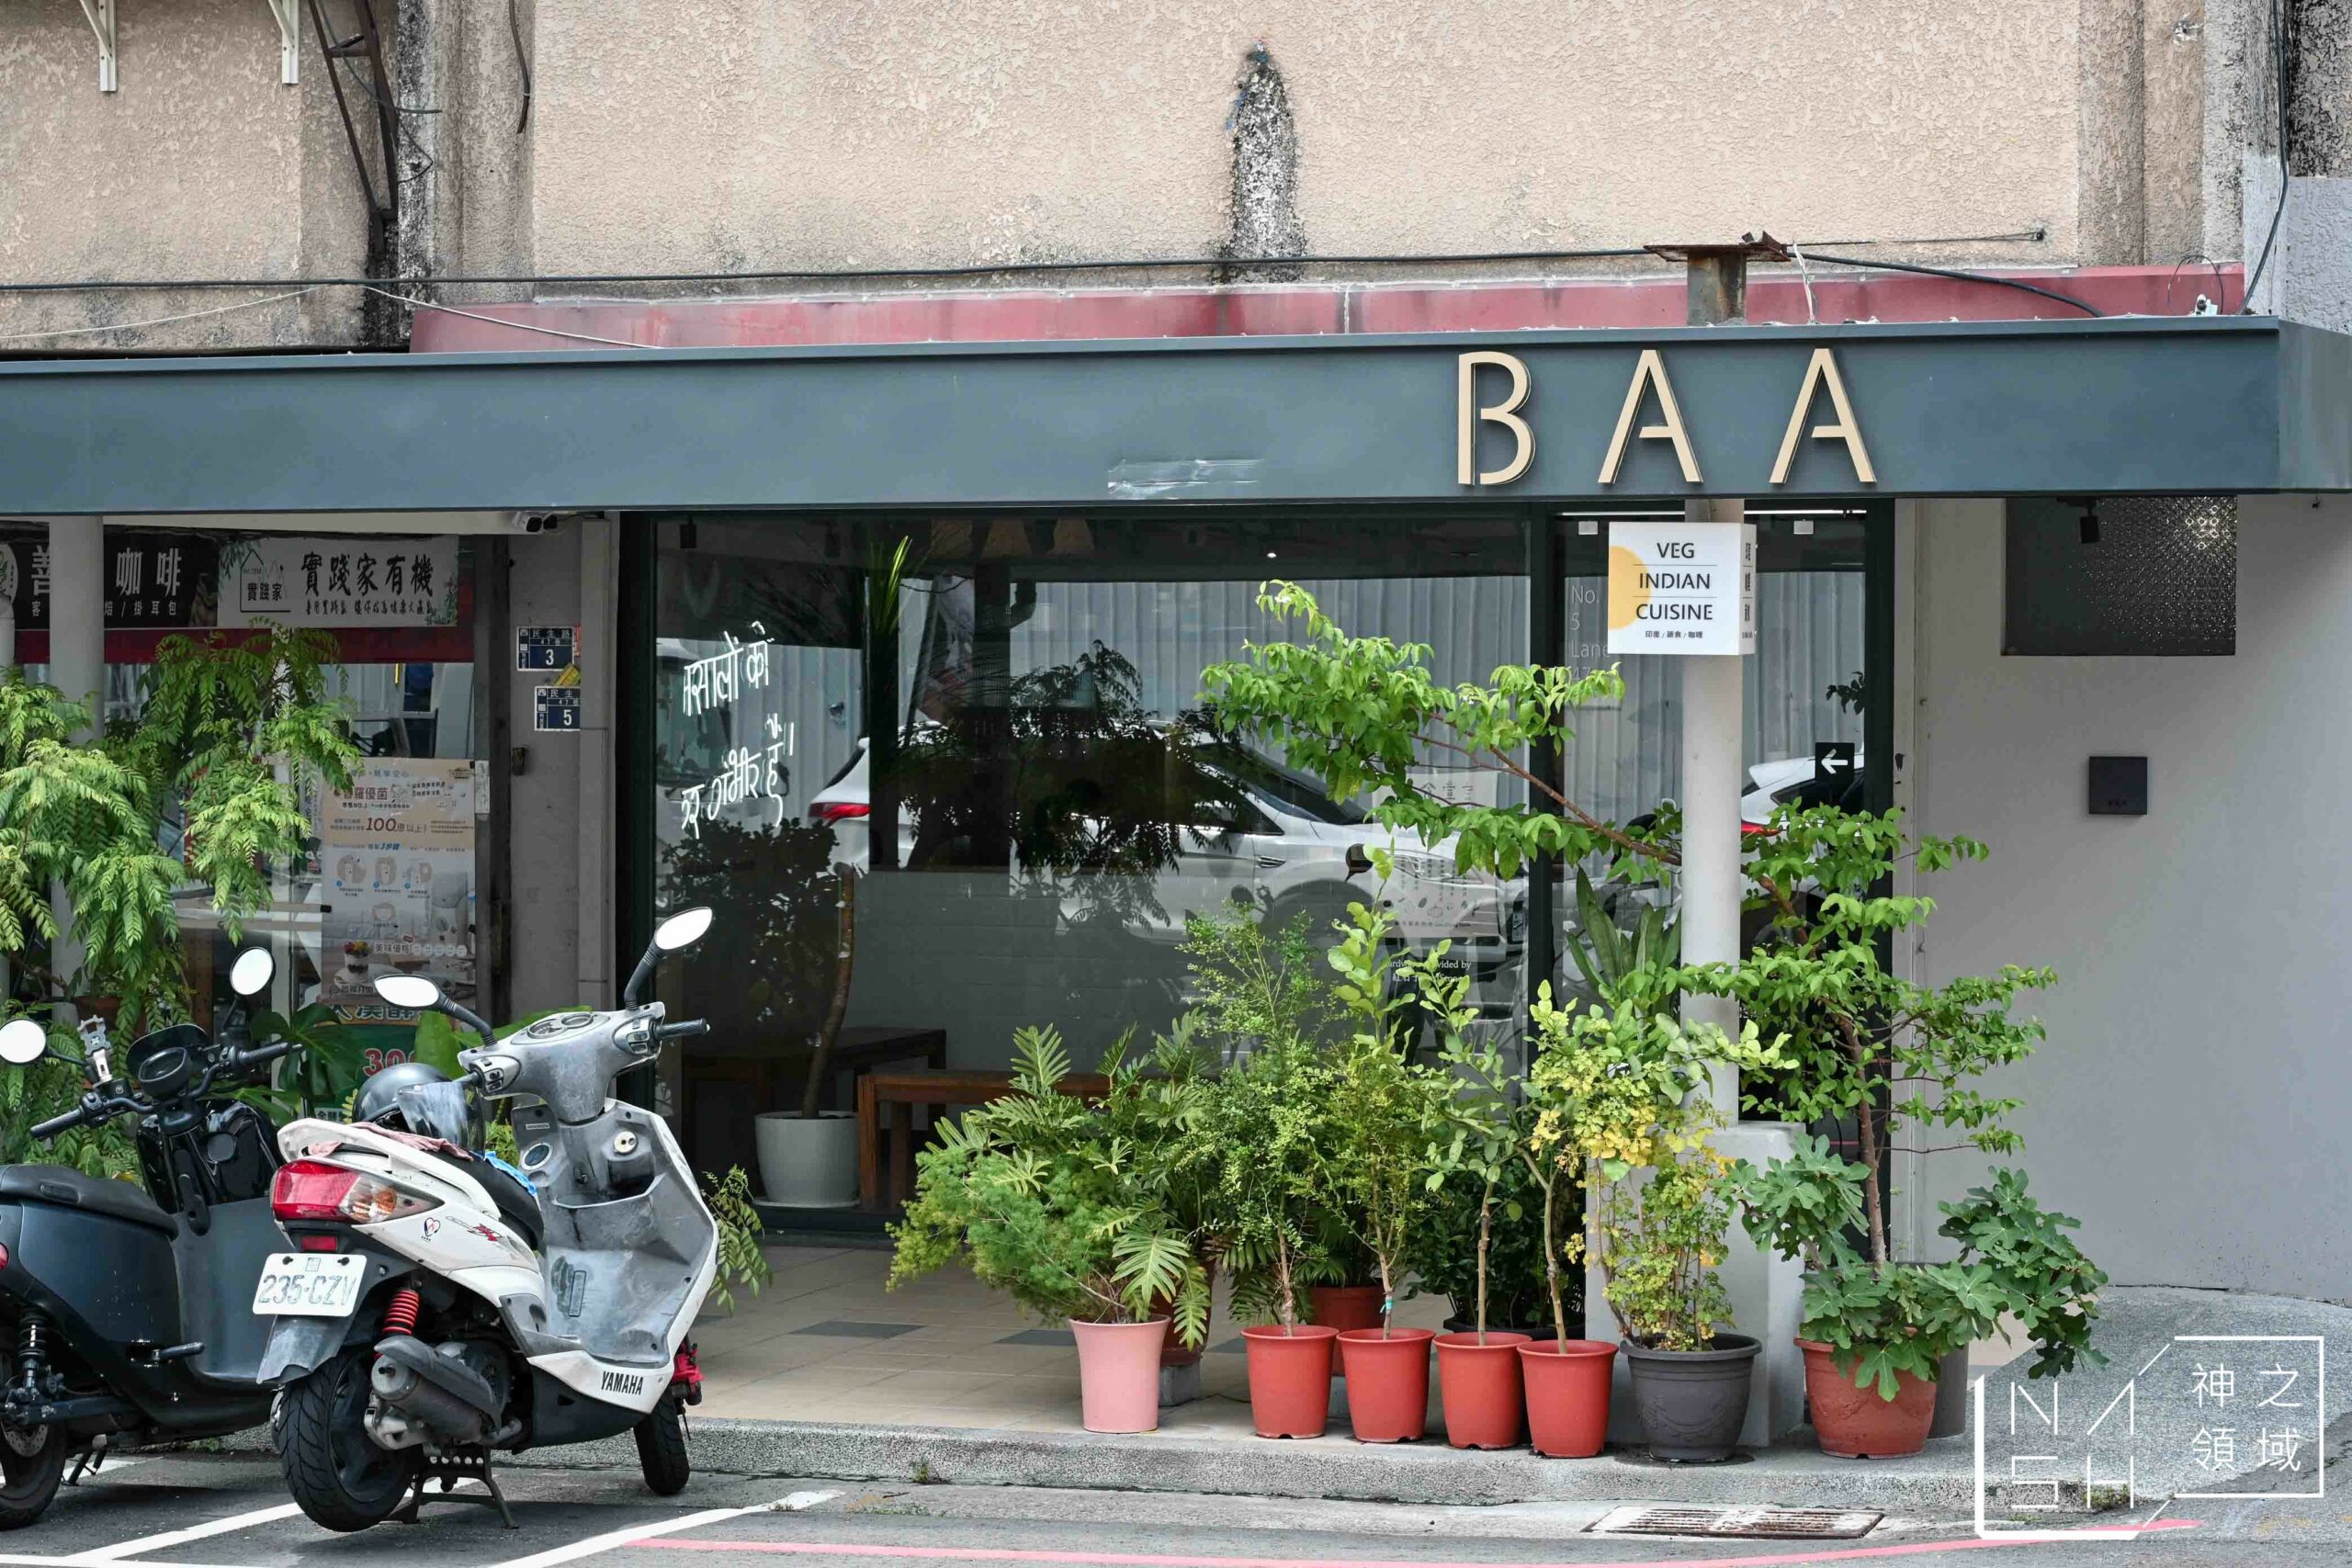 BAA / Veg Indian Cuisine 印度蔬食